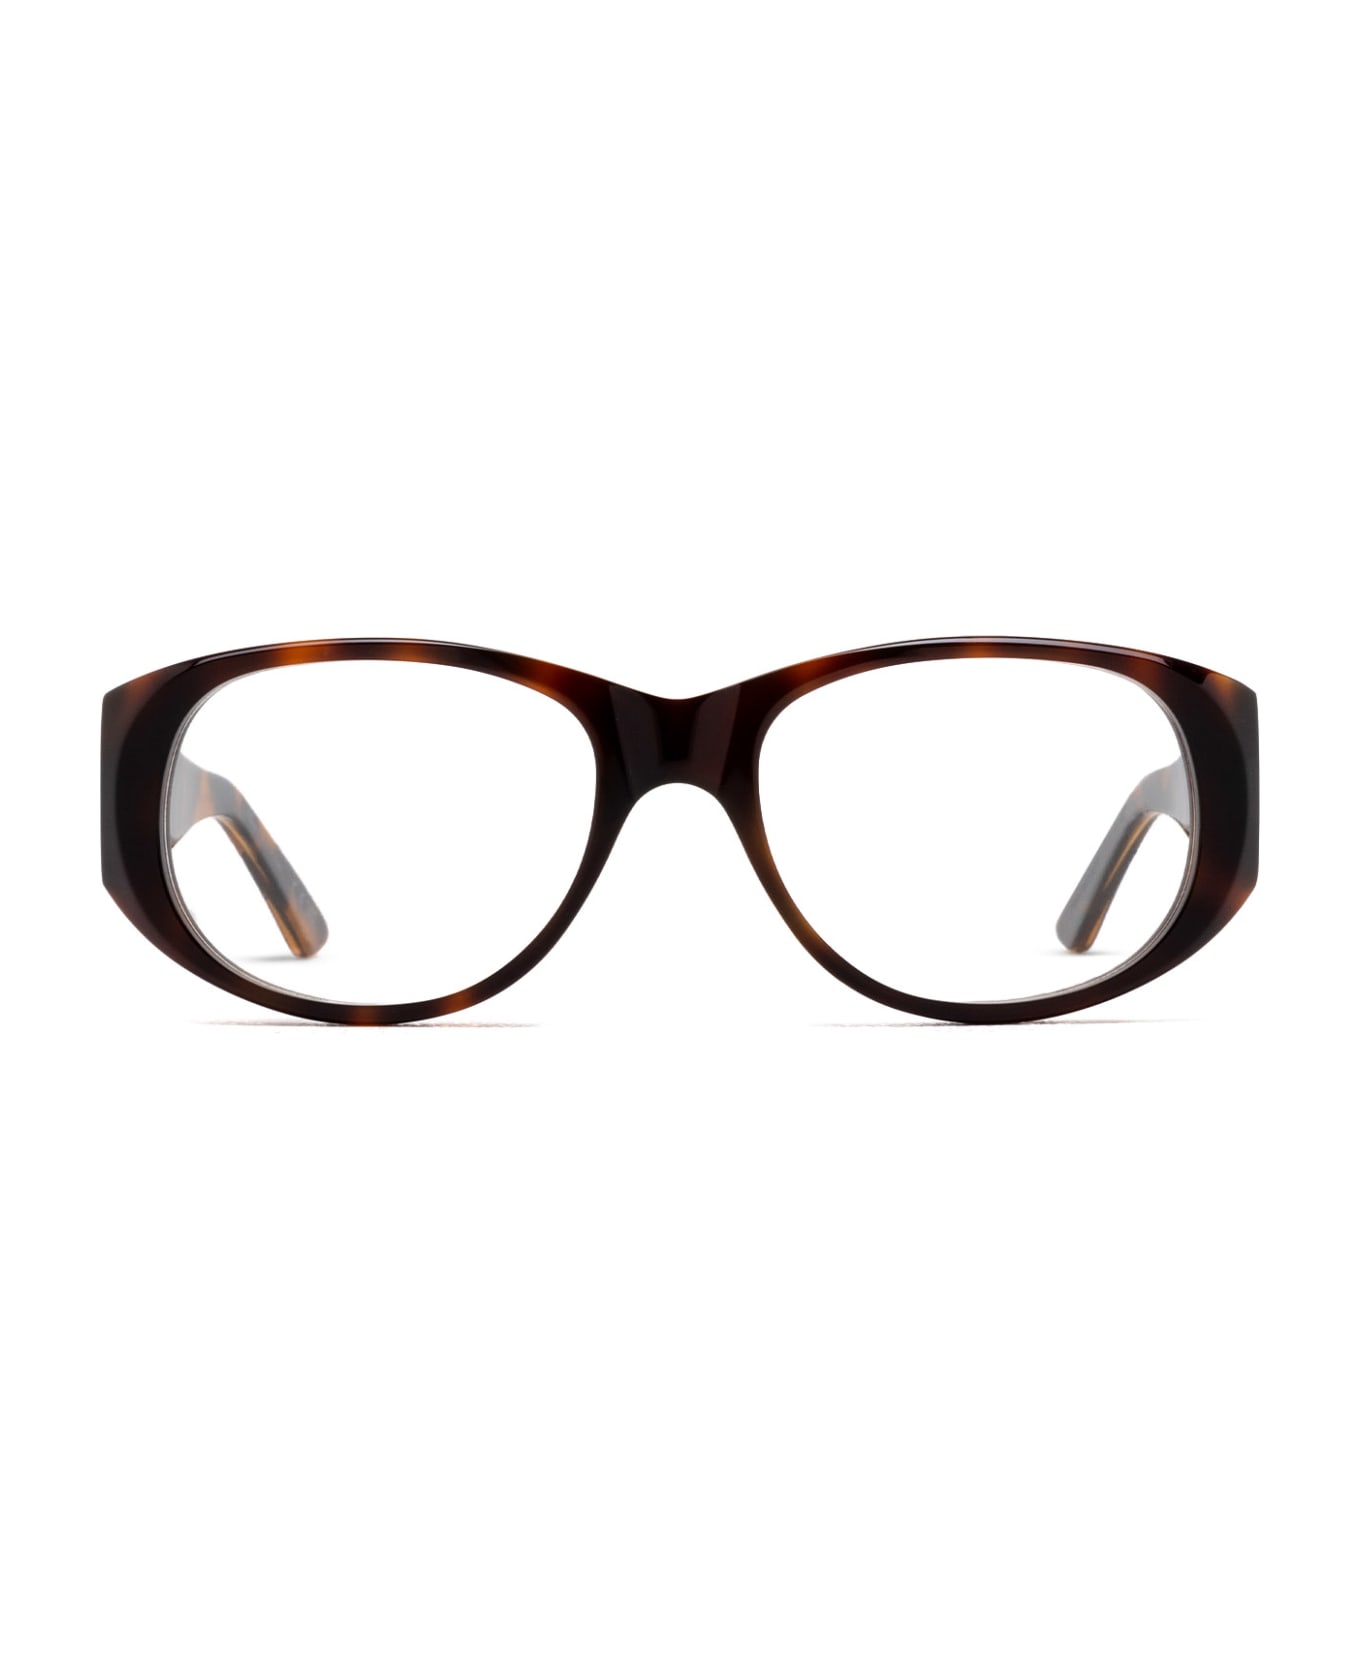 Marni Eyewear Orinoco Optical Havana Glasses - Havana